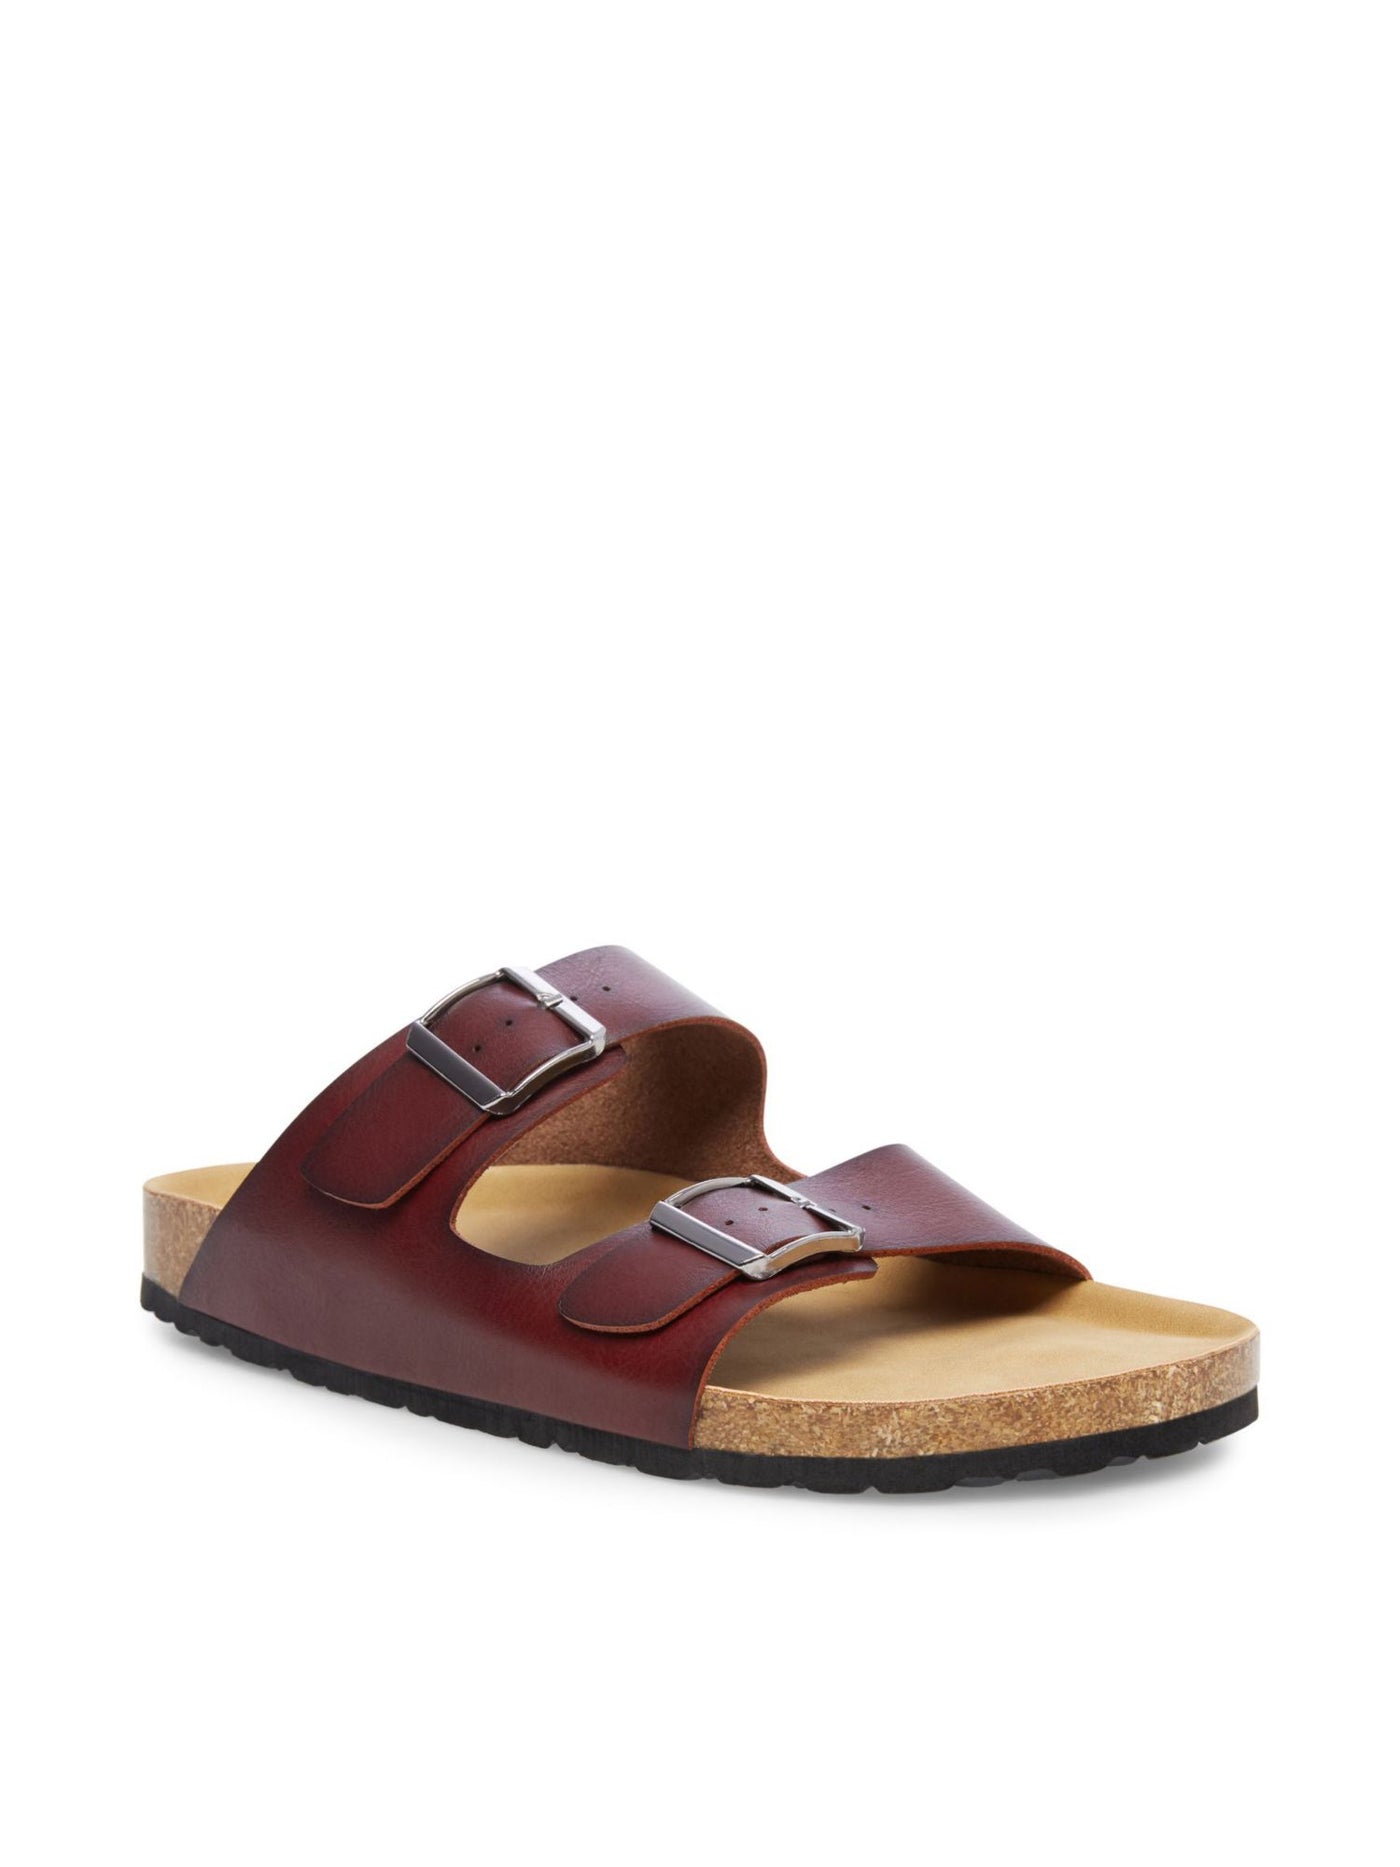 MADDEN Mens Brown Adjustable Padded Tafted Open Toe Buckle Slide Sandals Shoes 12 M